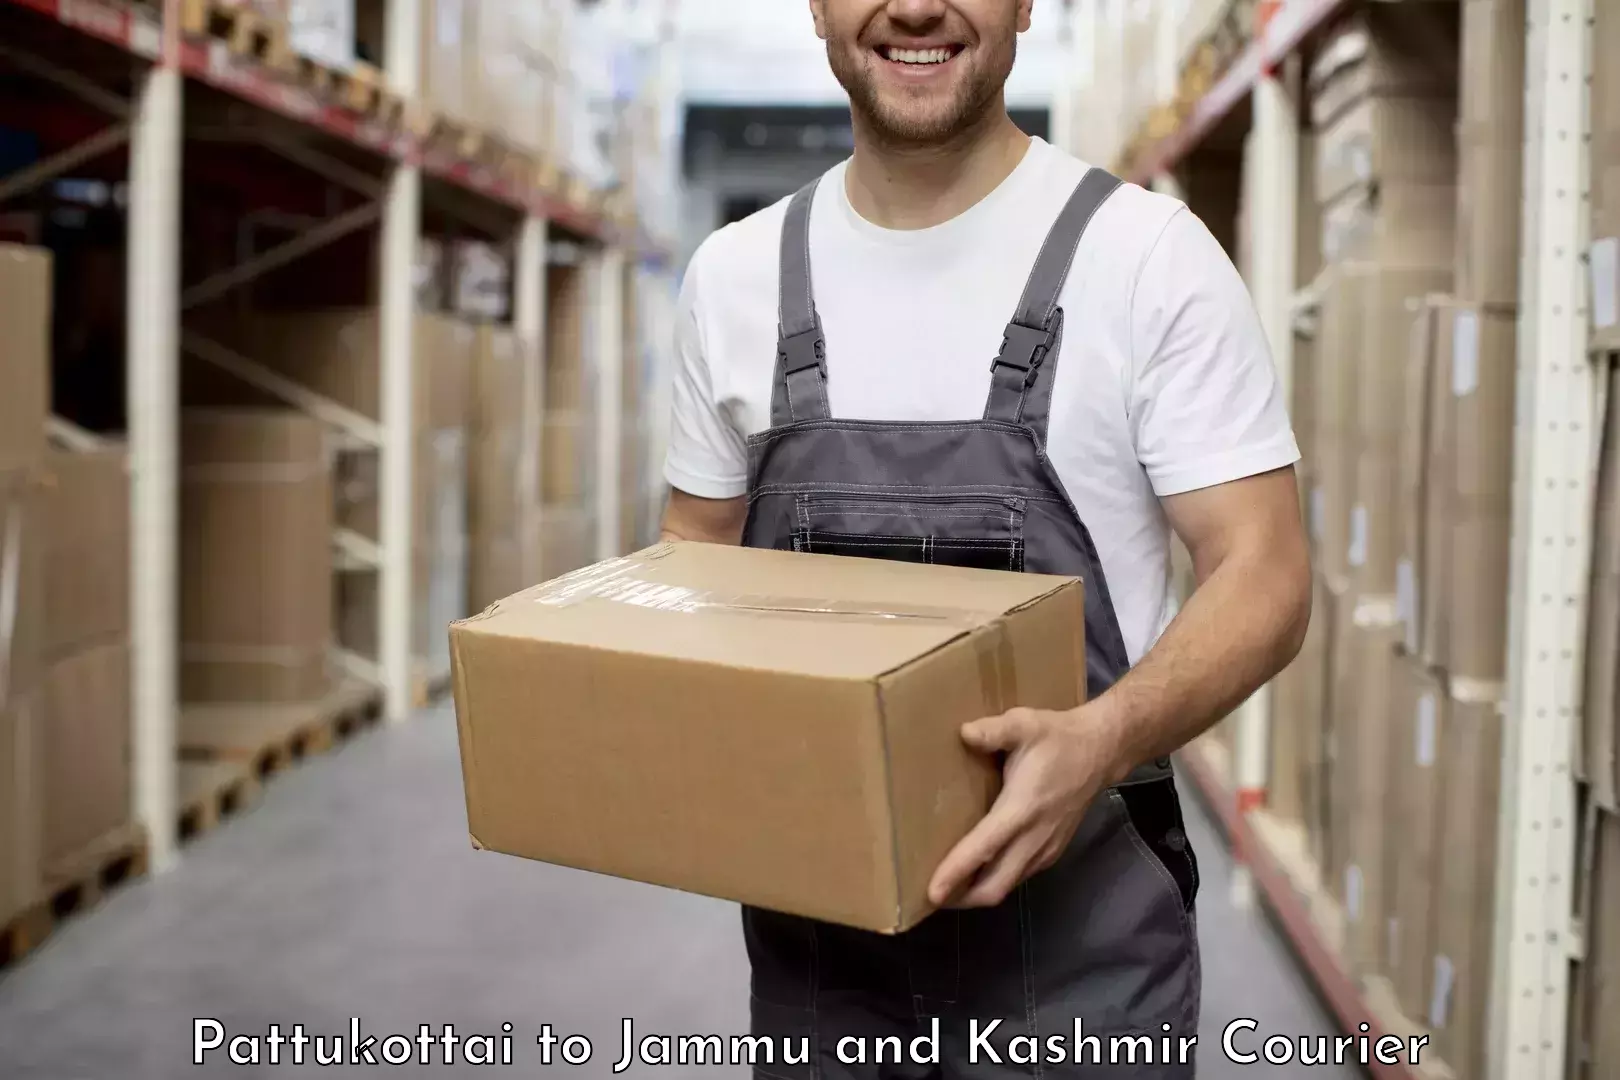 Fast-track shipping solutions Pattukottai to Srinagar Kashmir